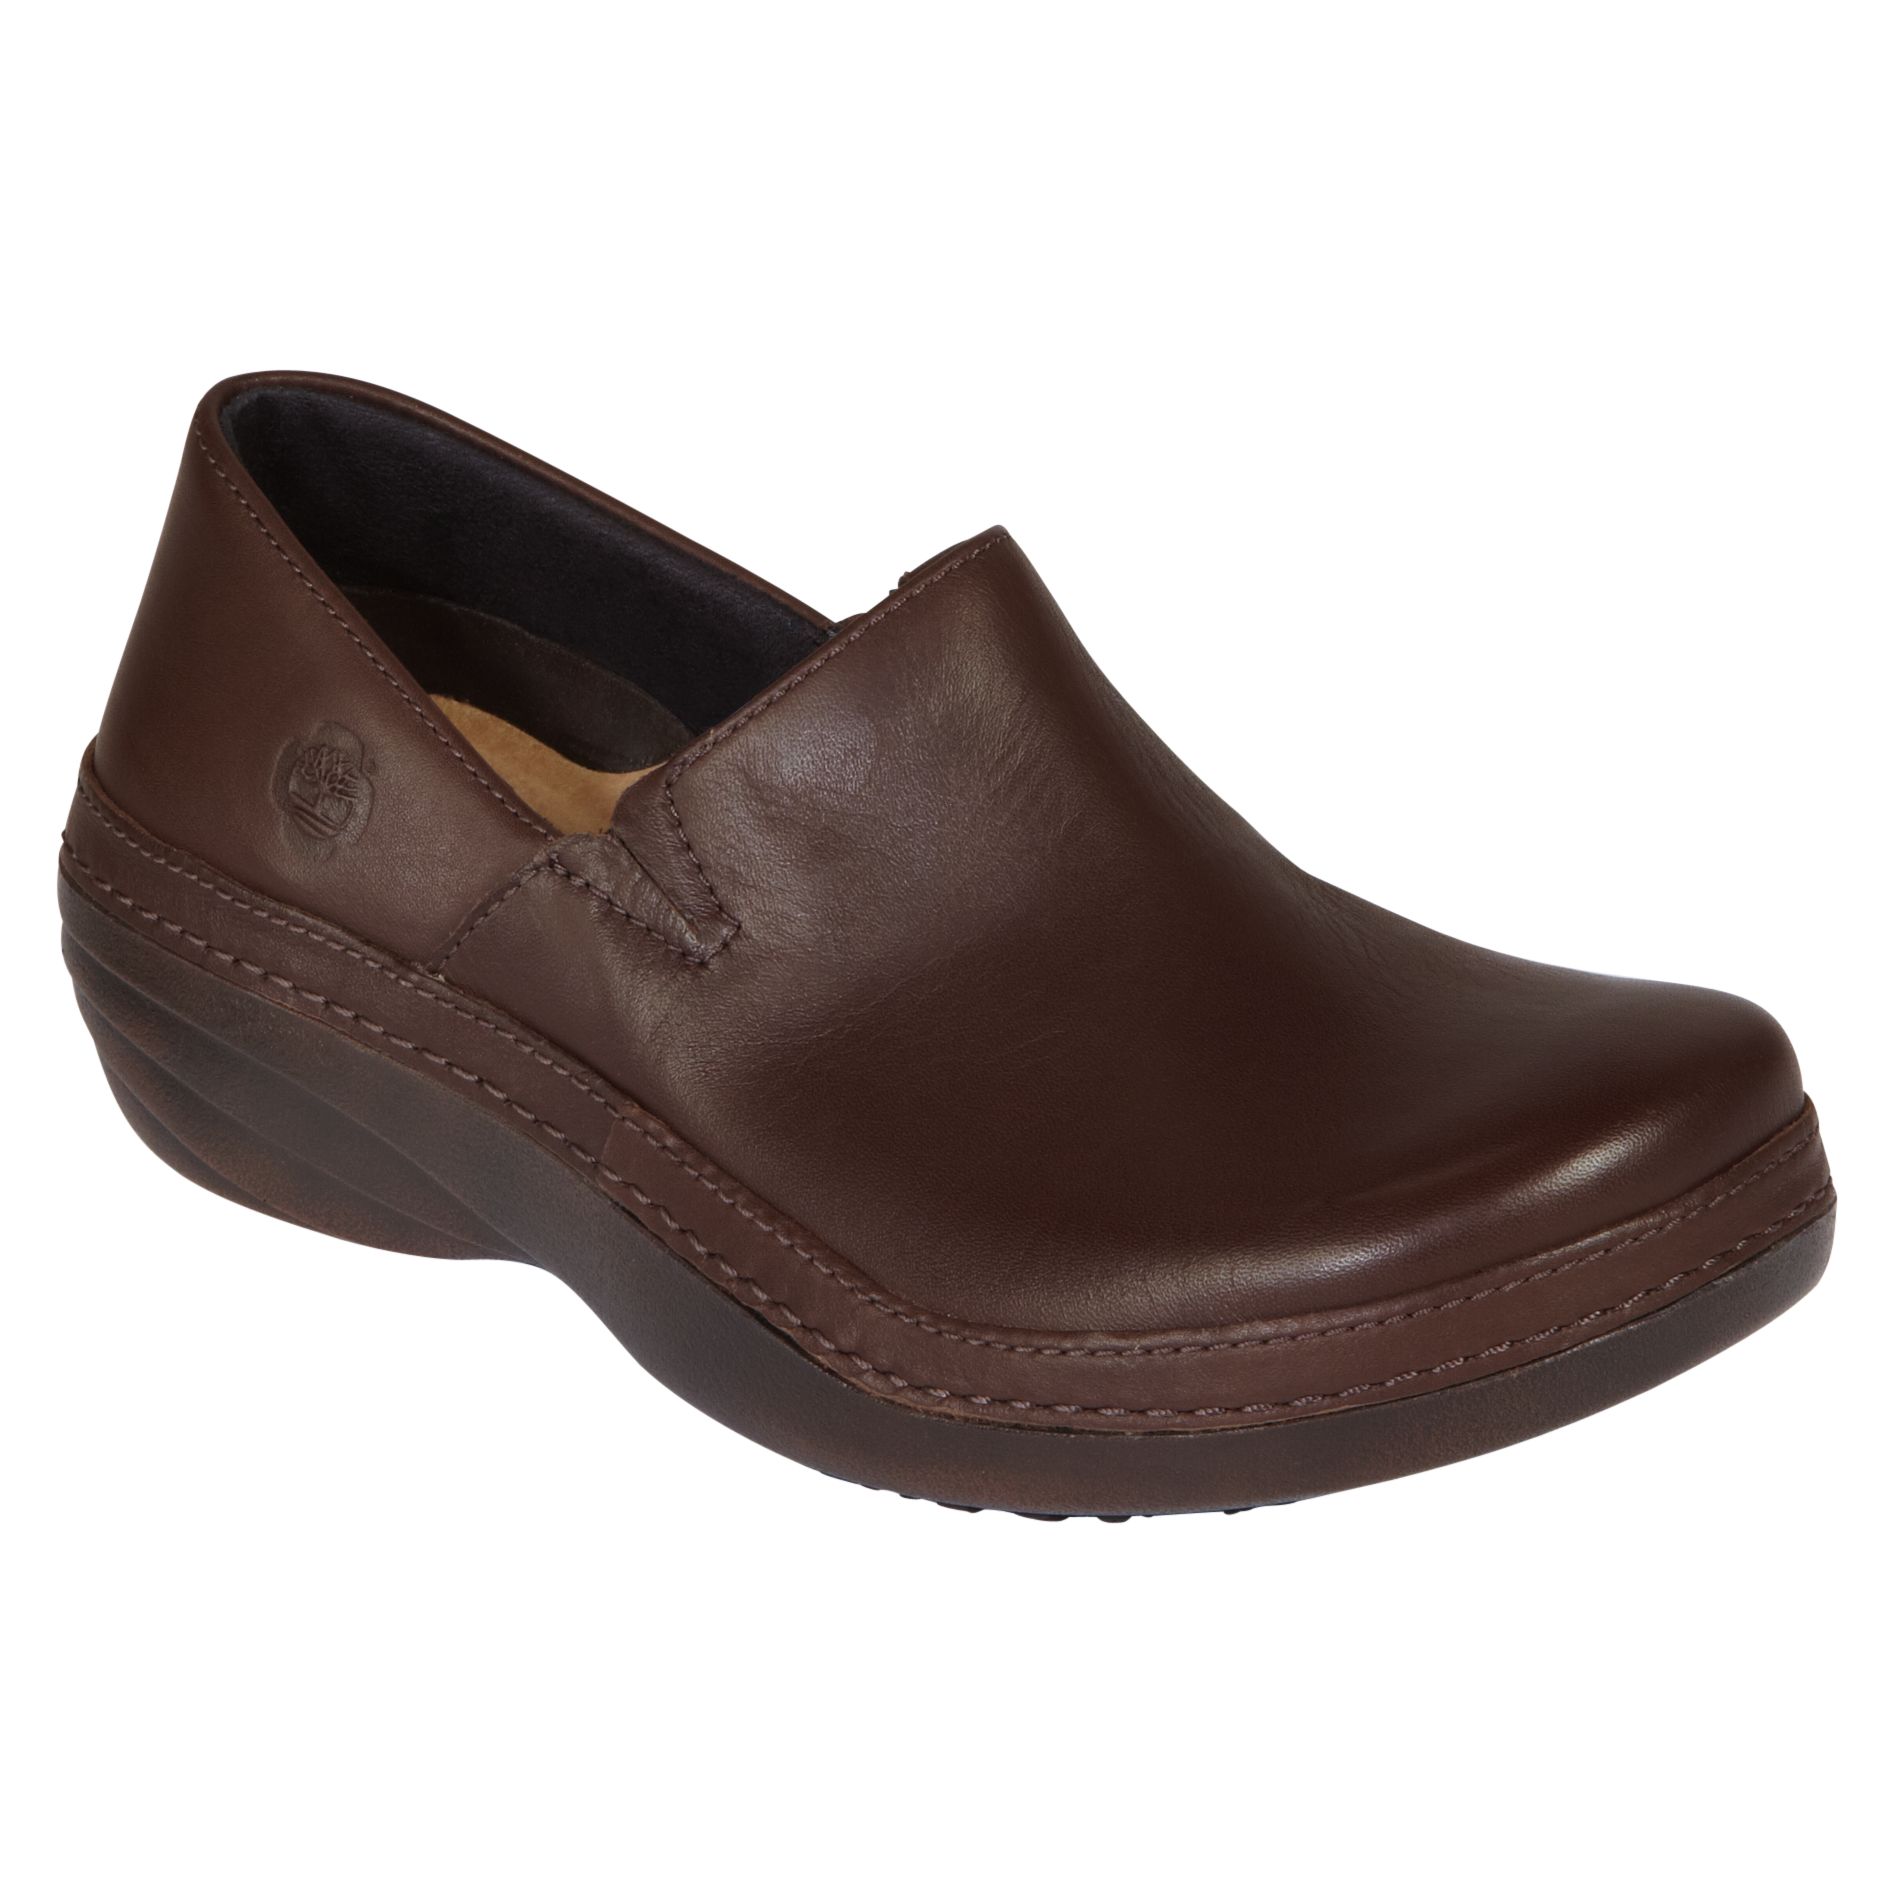 Timberland PRO Women's Brown Leather Nursing Shoe